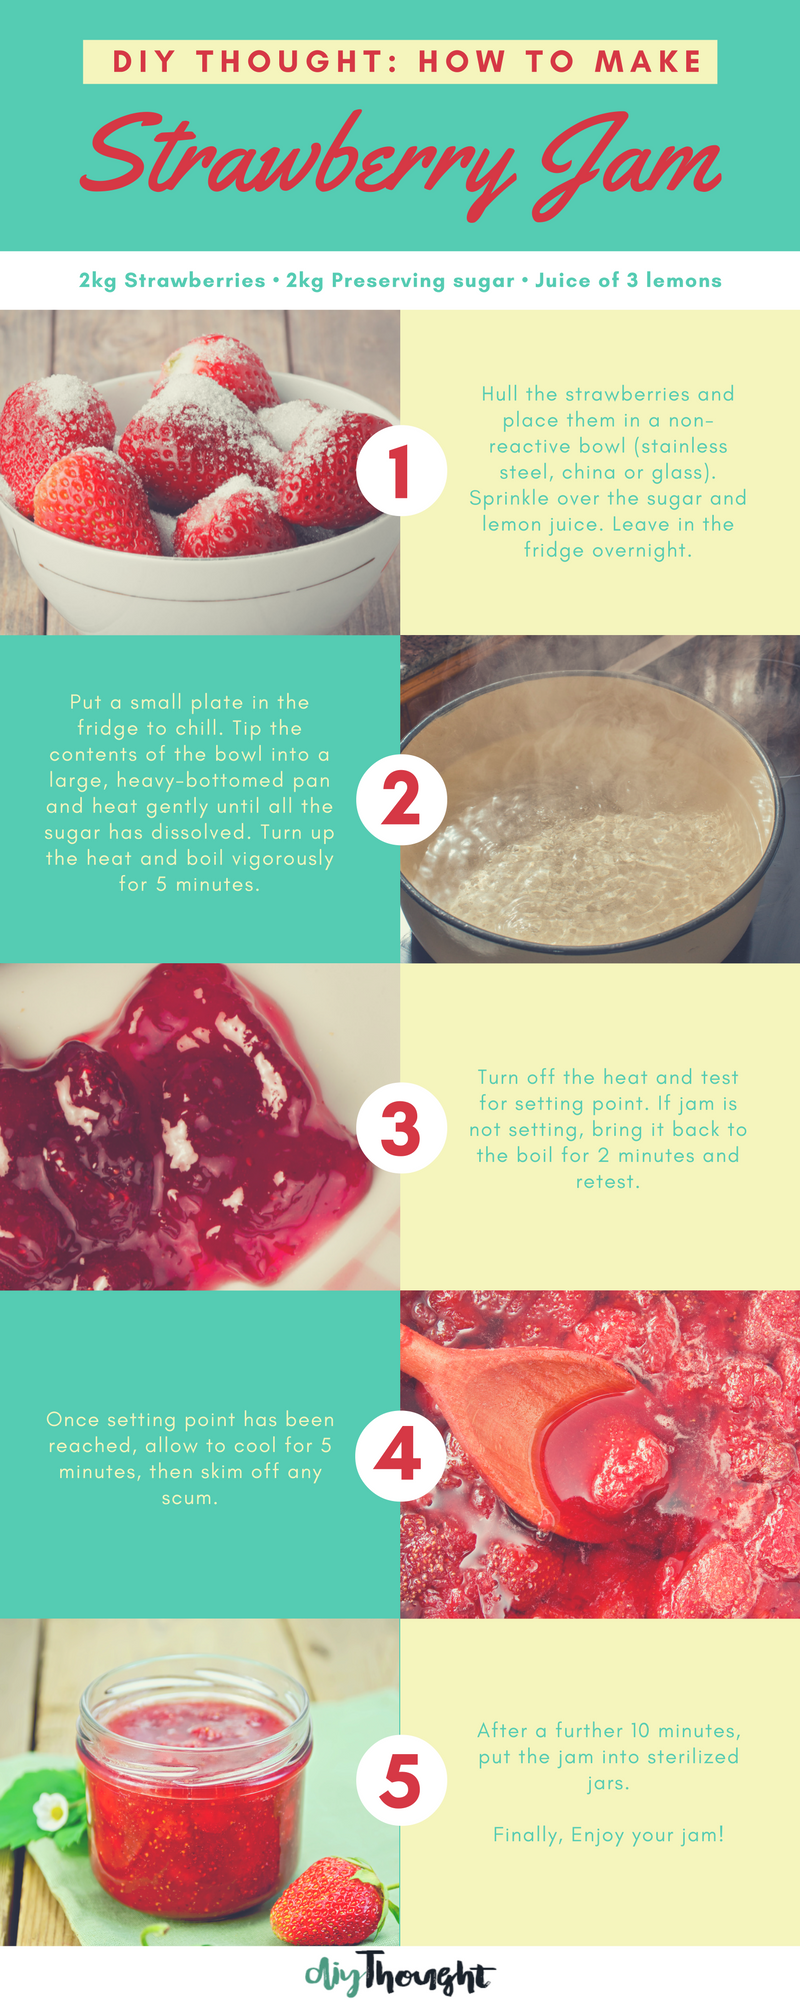 DIY Thought - Easy Homemade Strawberry Jam